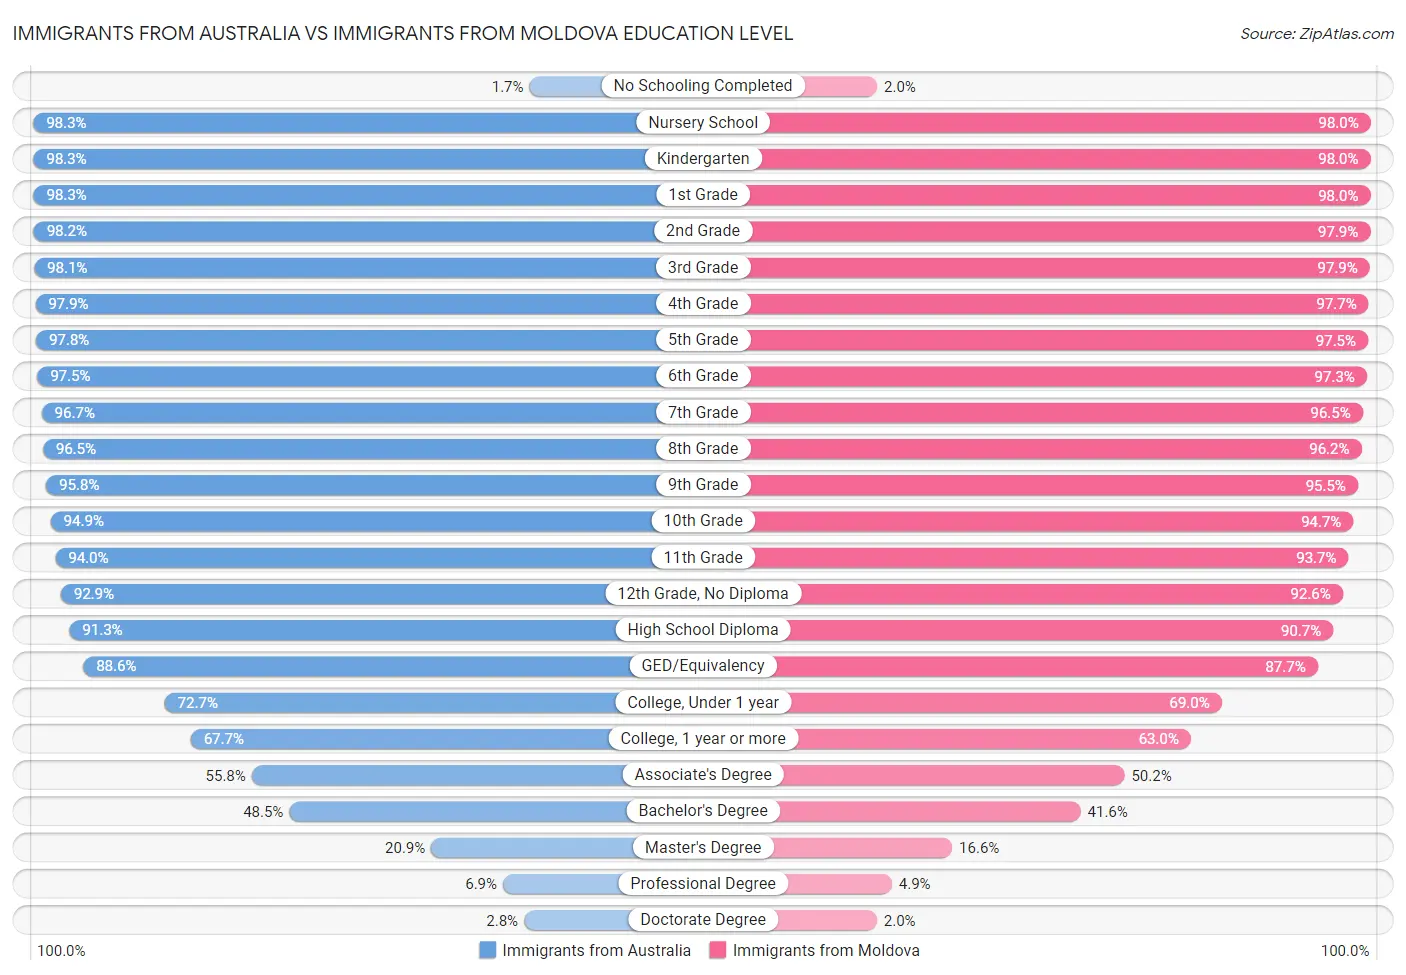 Immigrants from Australia vs Immigrants from Moldova Education Level